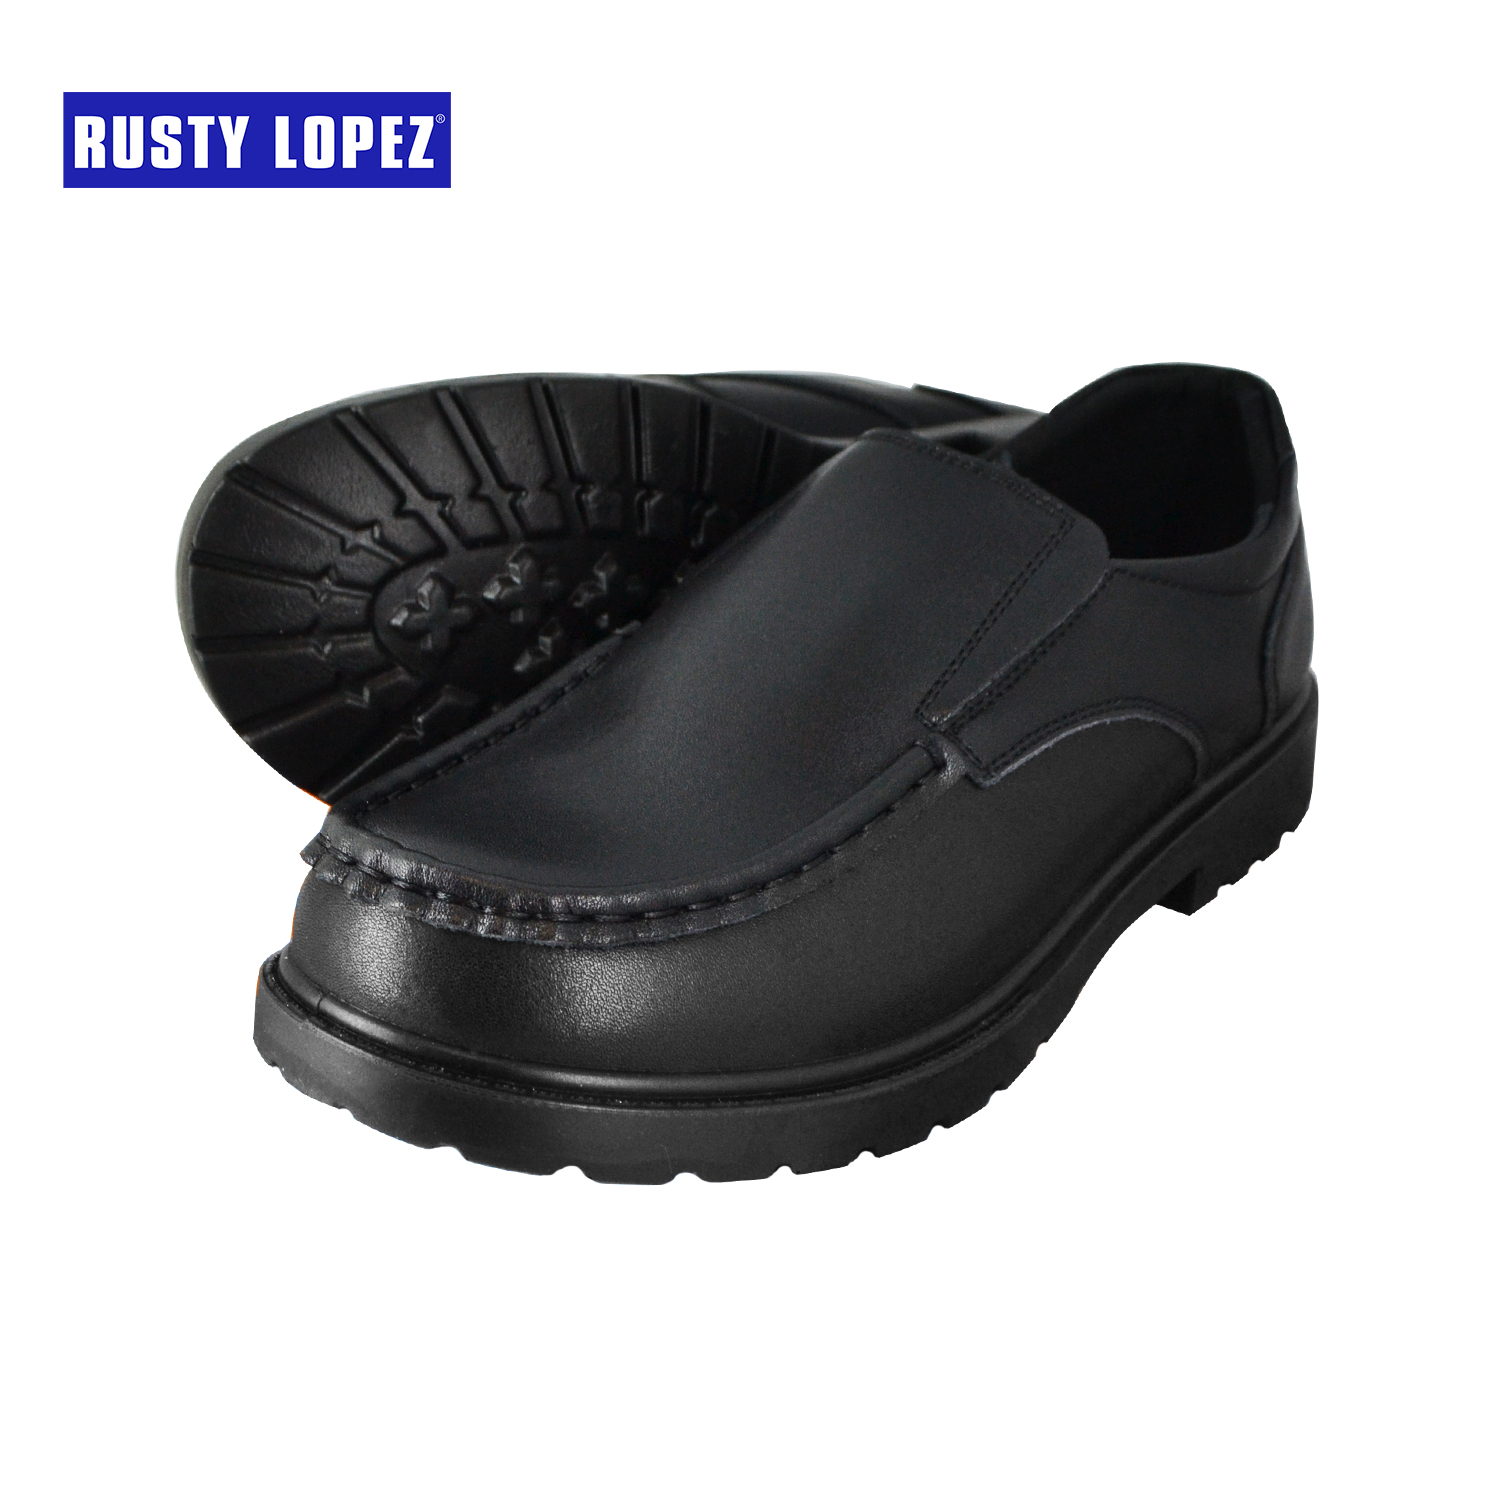 rusty lopez rubber shoes